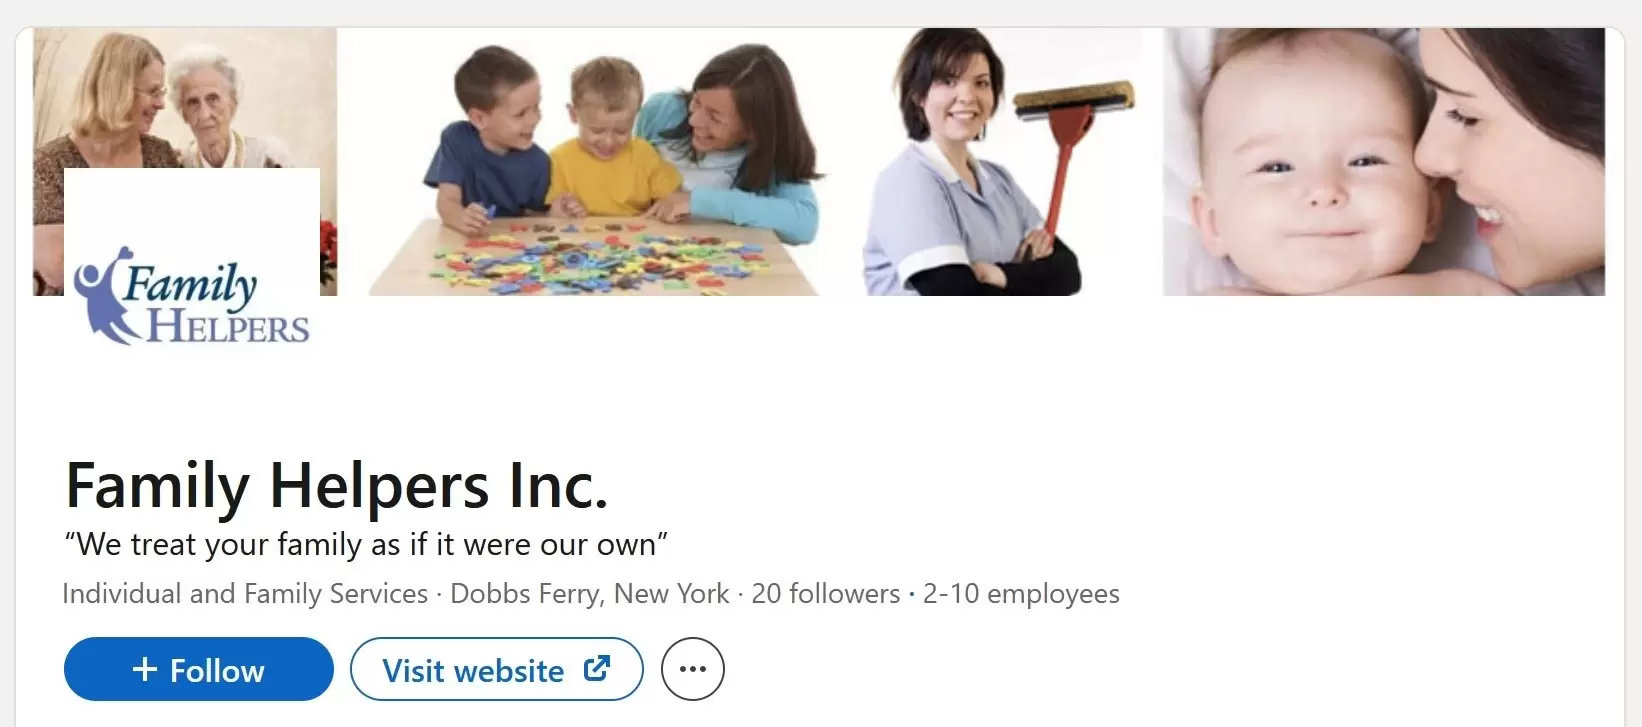 Family Helpers Inc on LinkedIn